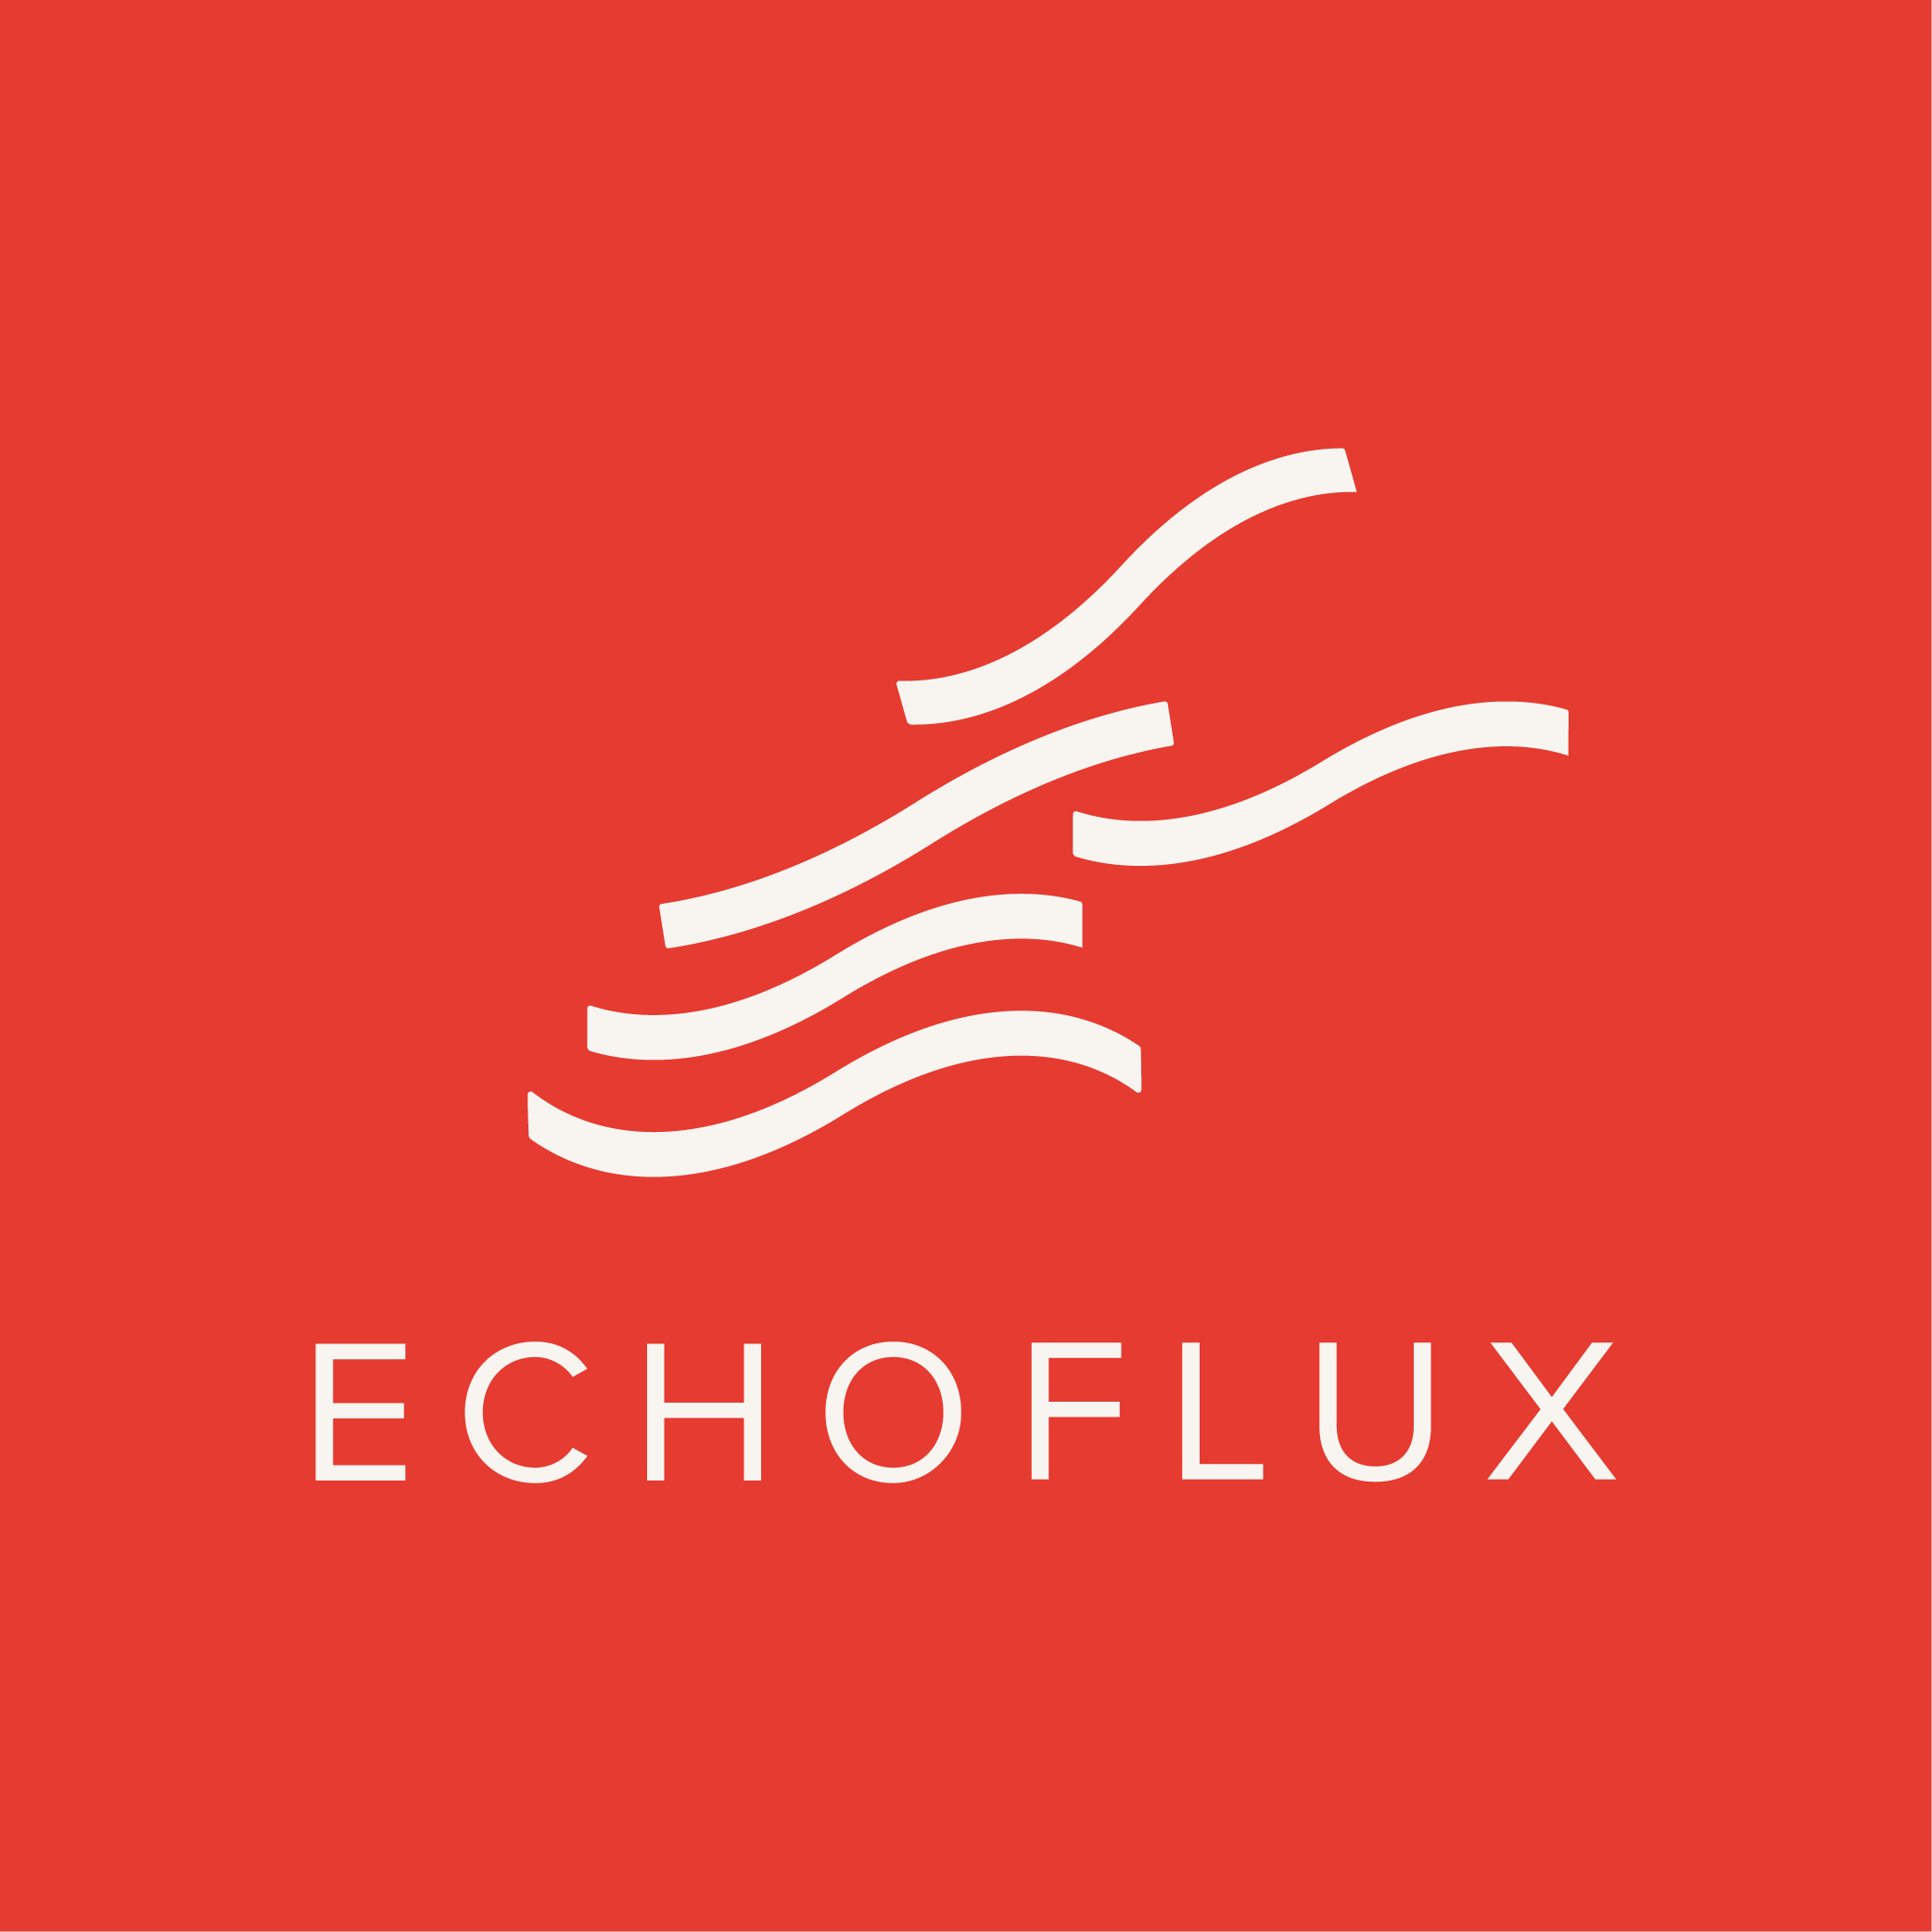 Echoflux logo